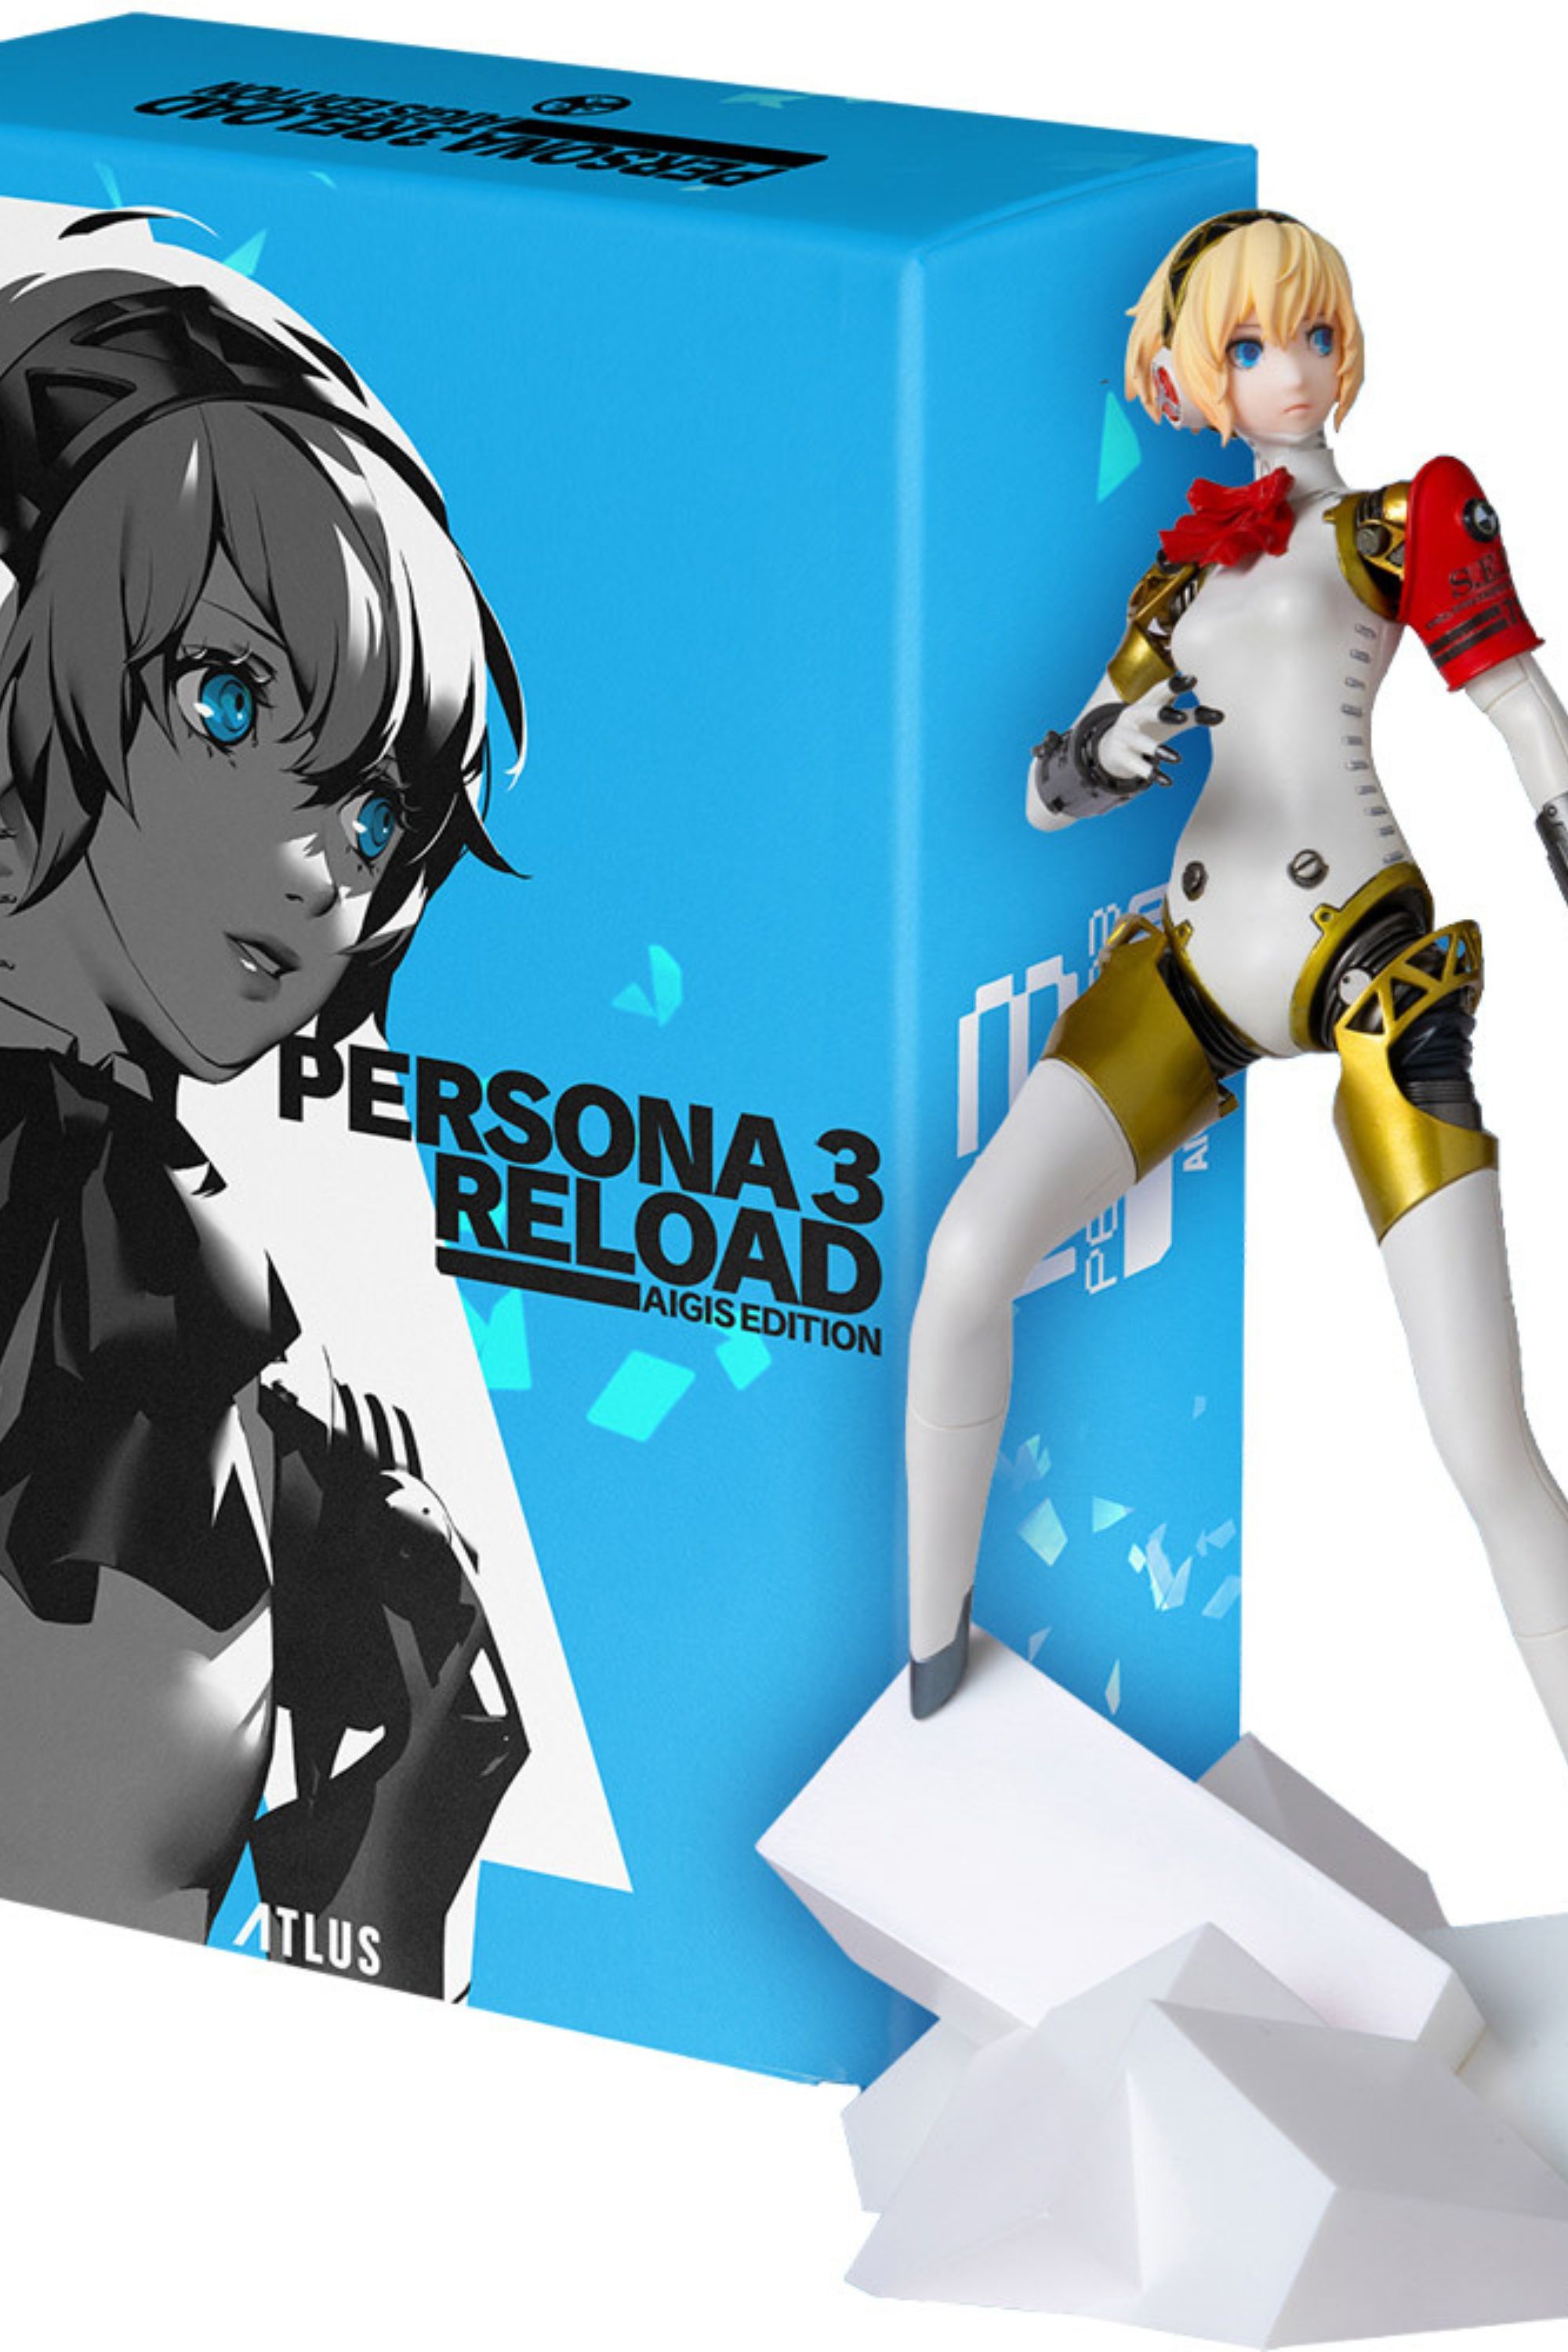 Persona 3 Reload Aigis Edition UNBOXING #persona3reload #P3RE #atlus  #atlusgames #persona5 